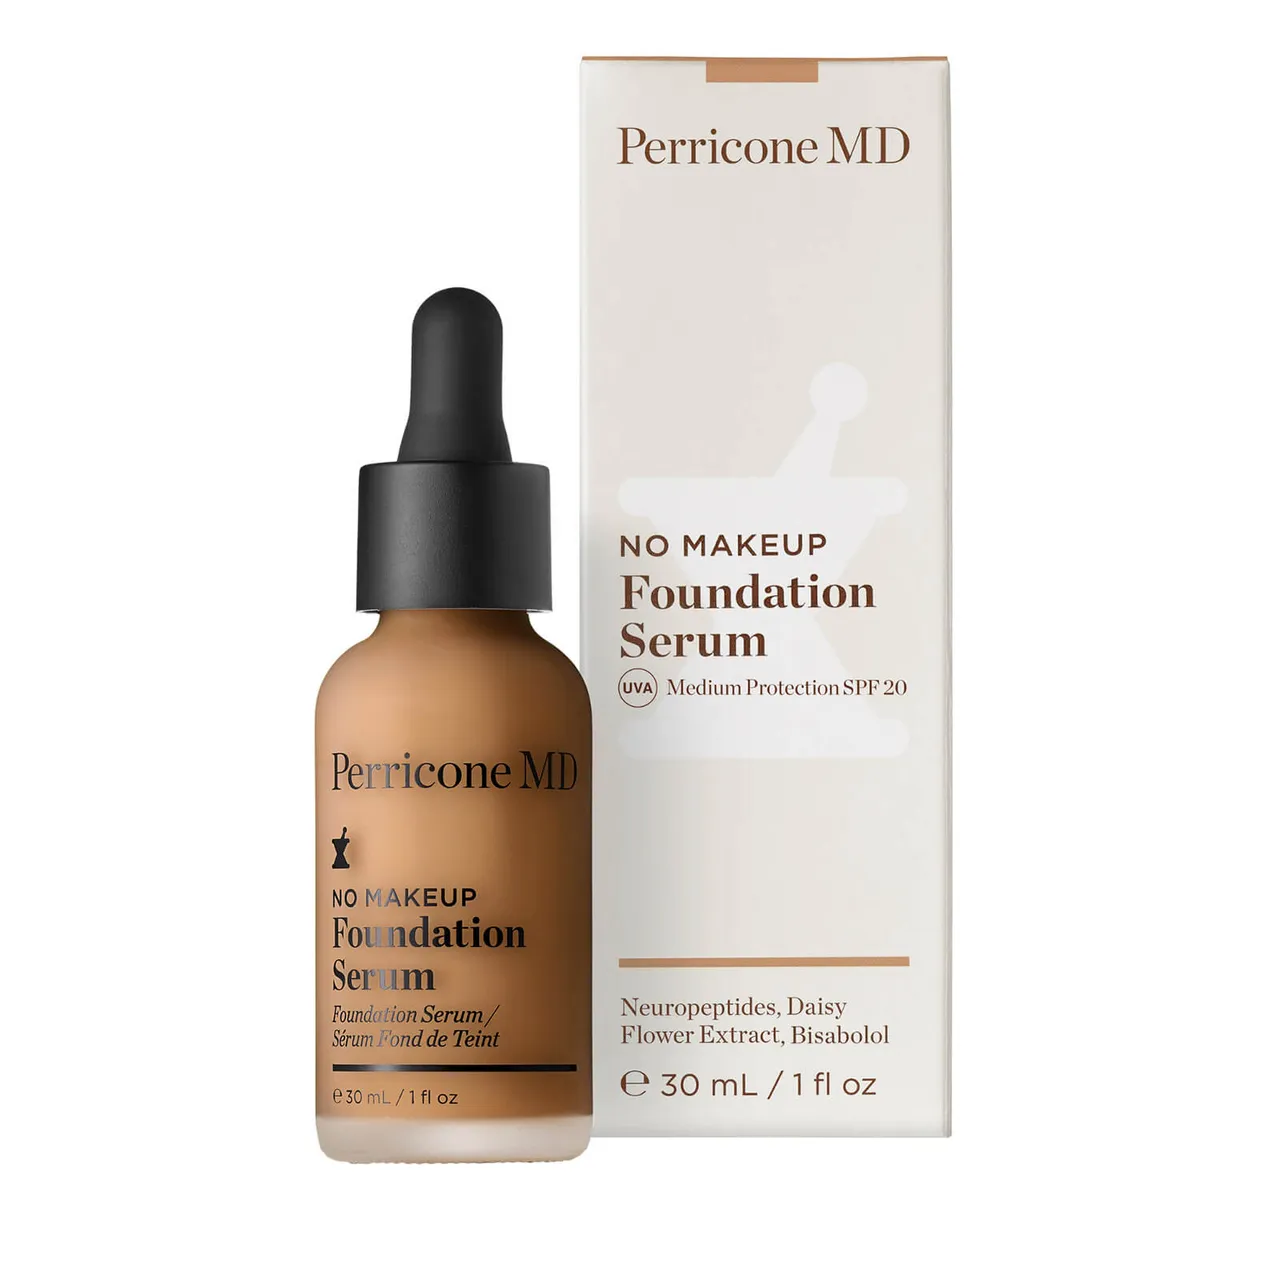 Perricone MD No Makeup Foundation Serum SPF 20 30ml (Various Shades) - 7 Tan